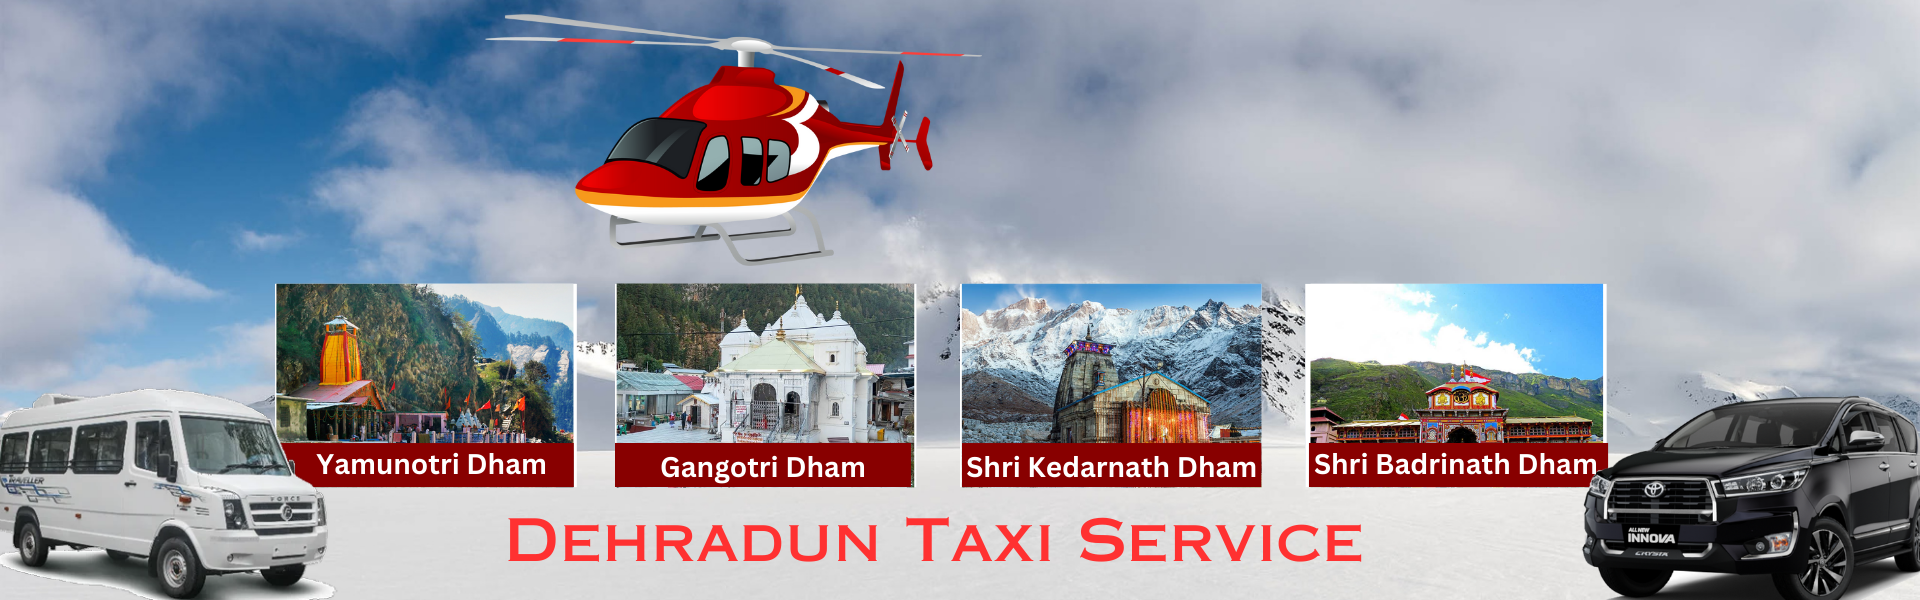 Dehradun-Taxi-Service